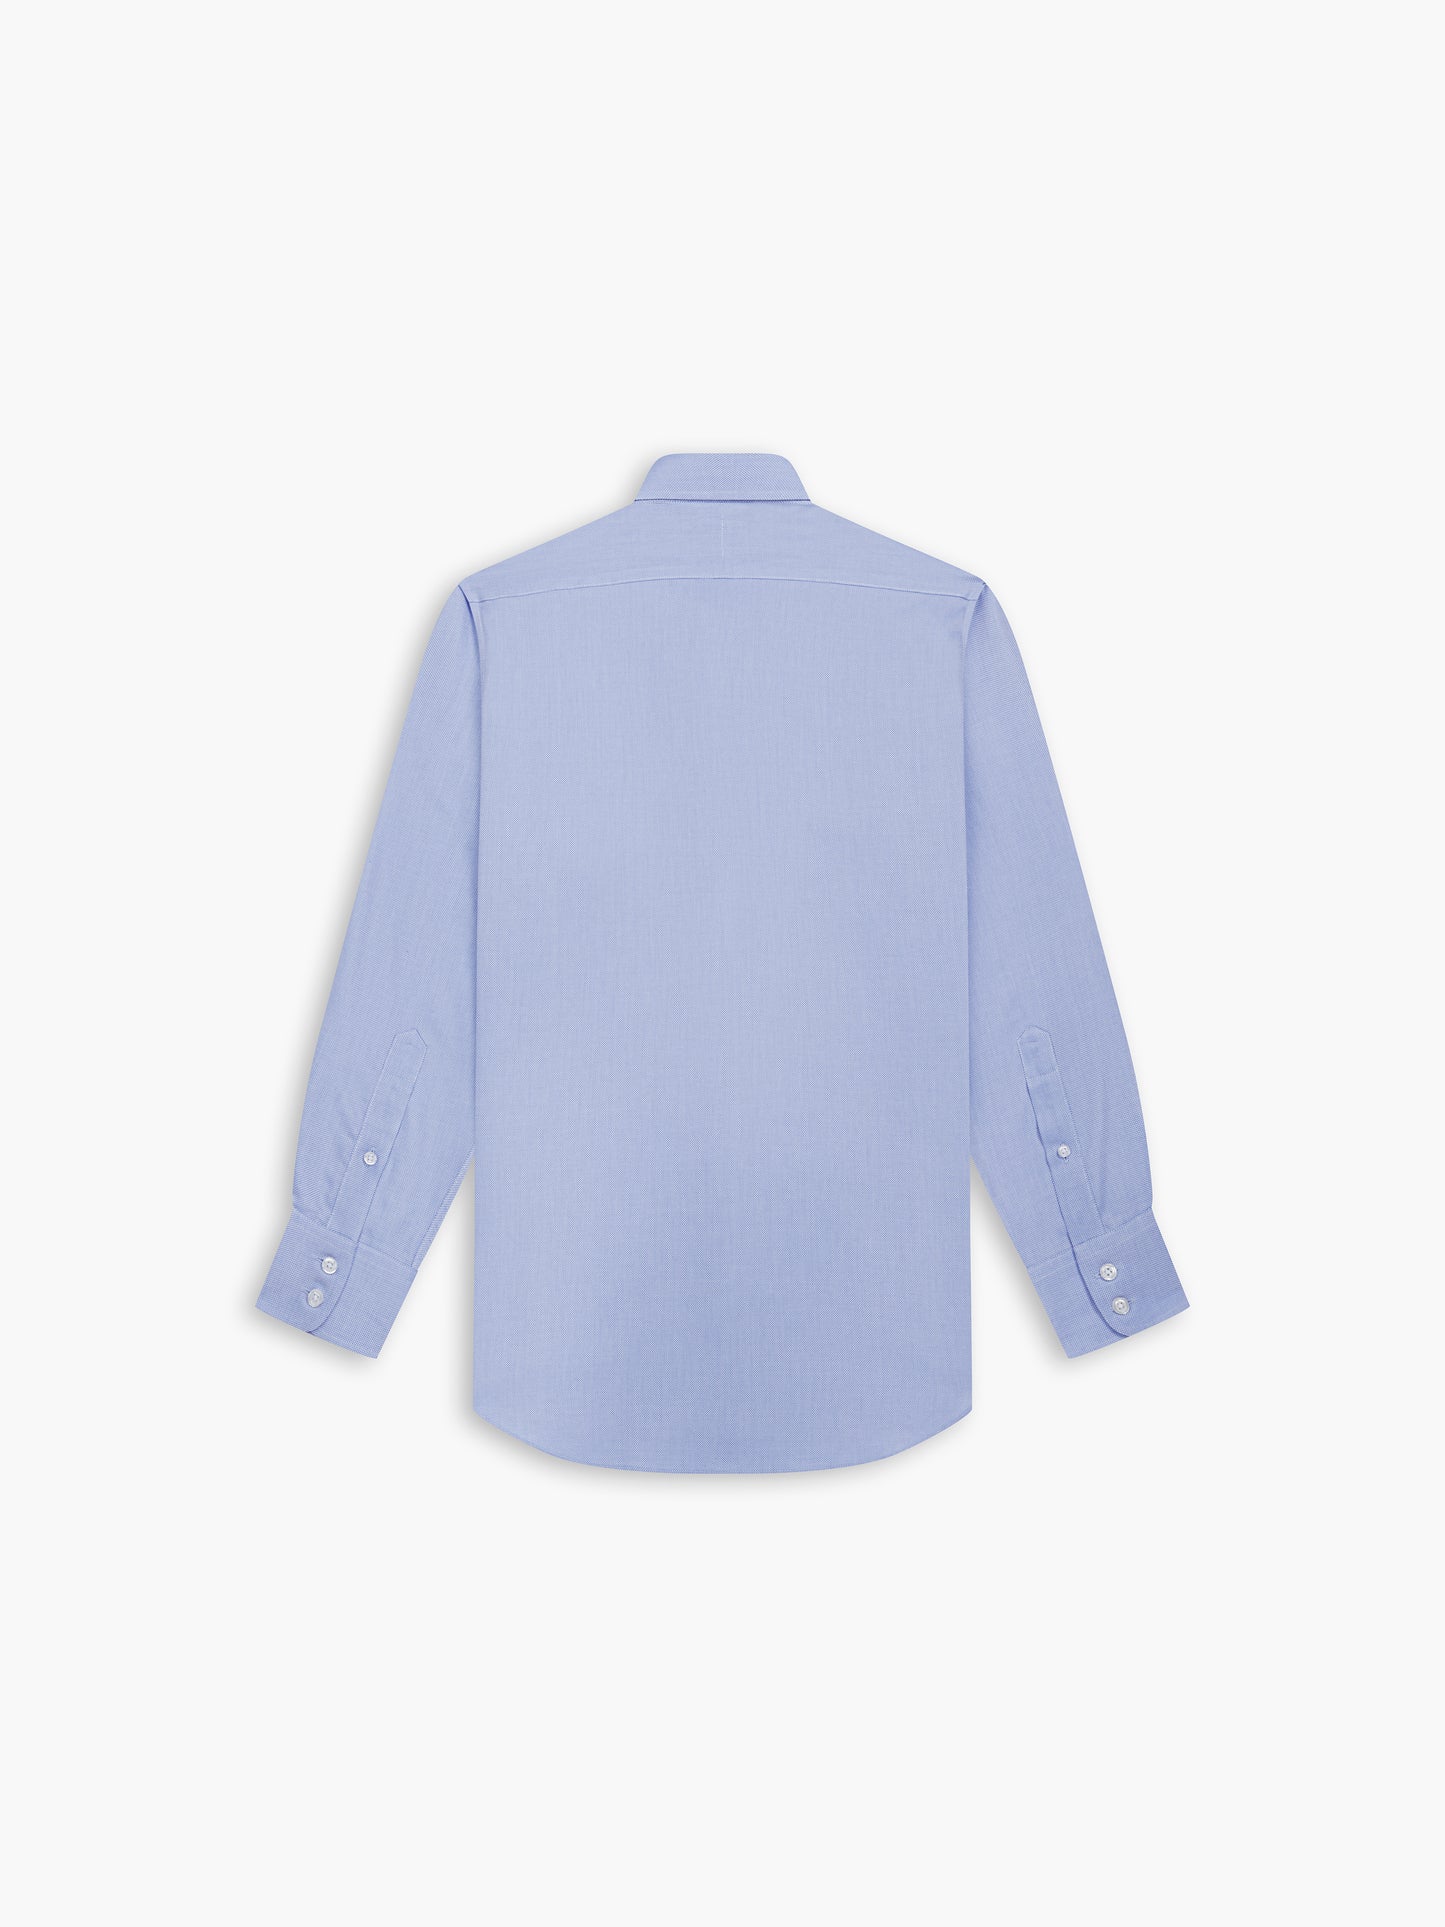 Non-Iron Blue Oxford Regular Fit Single Cuff Classic Collar Shirt